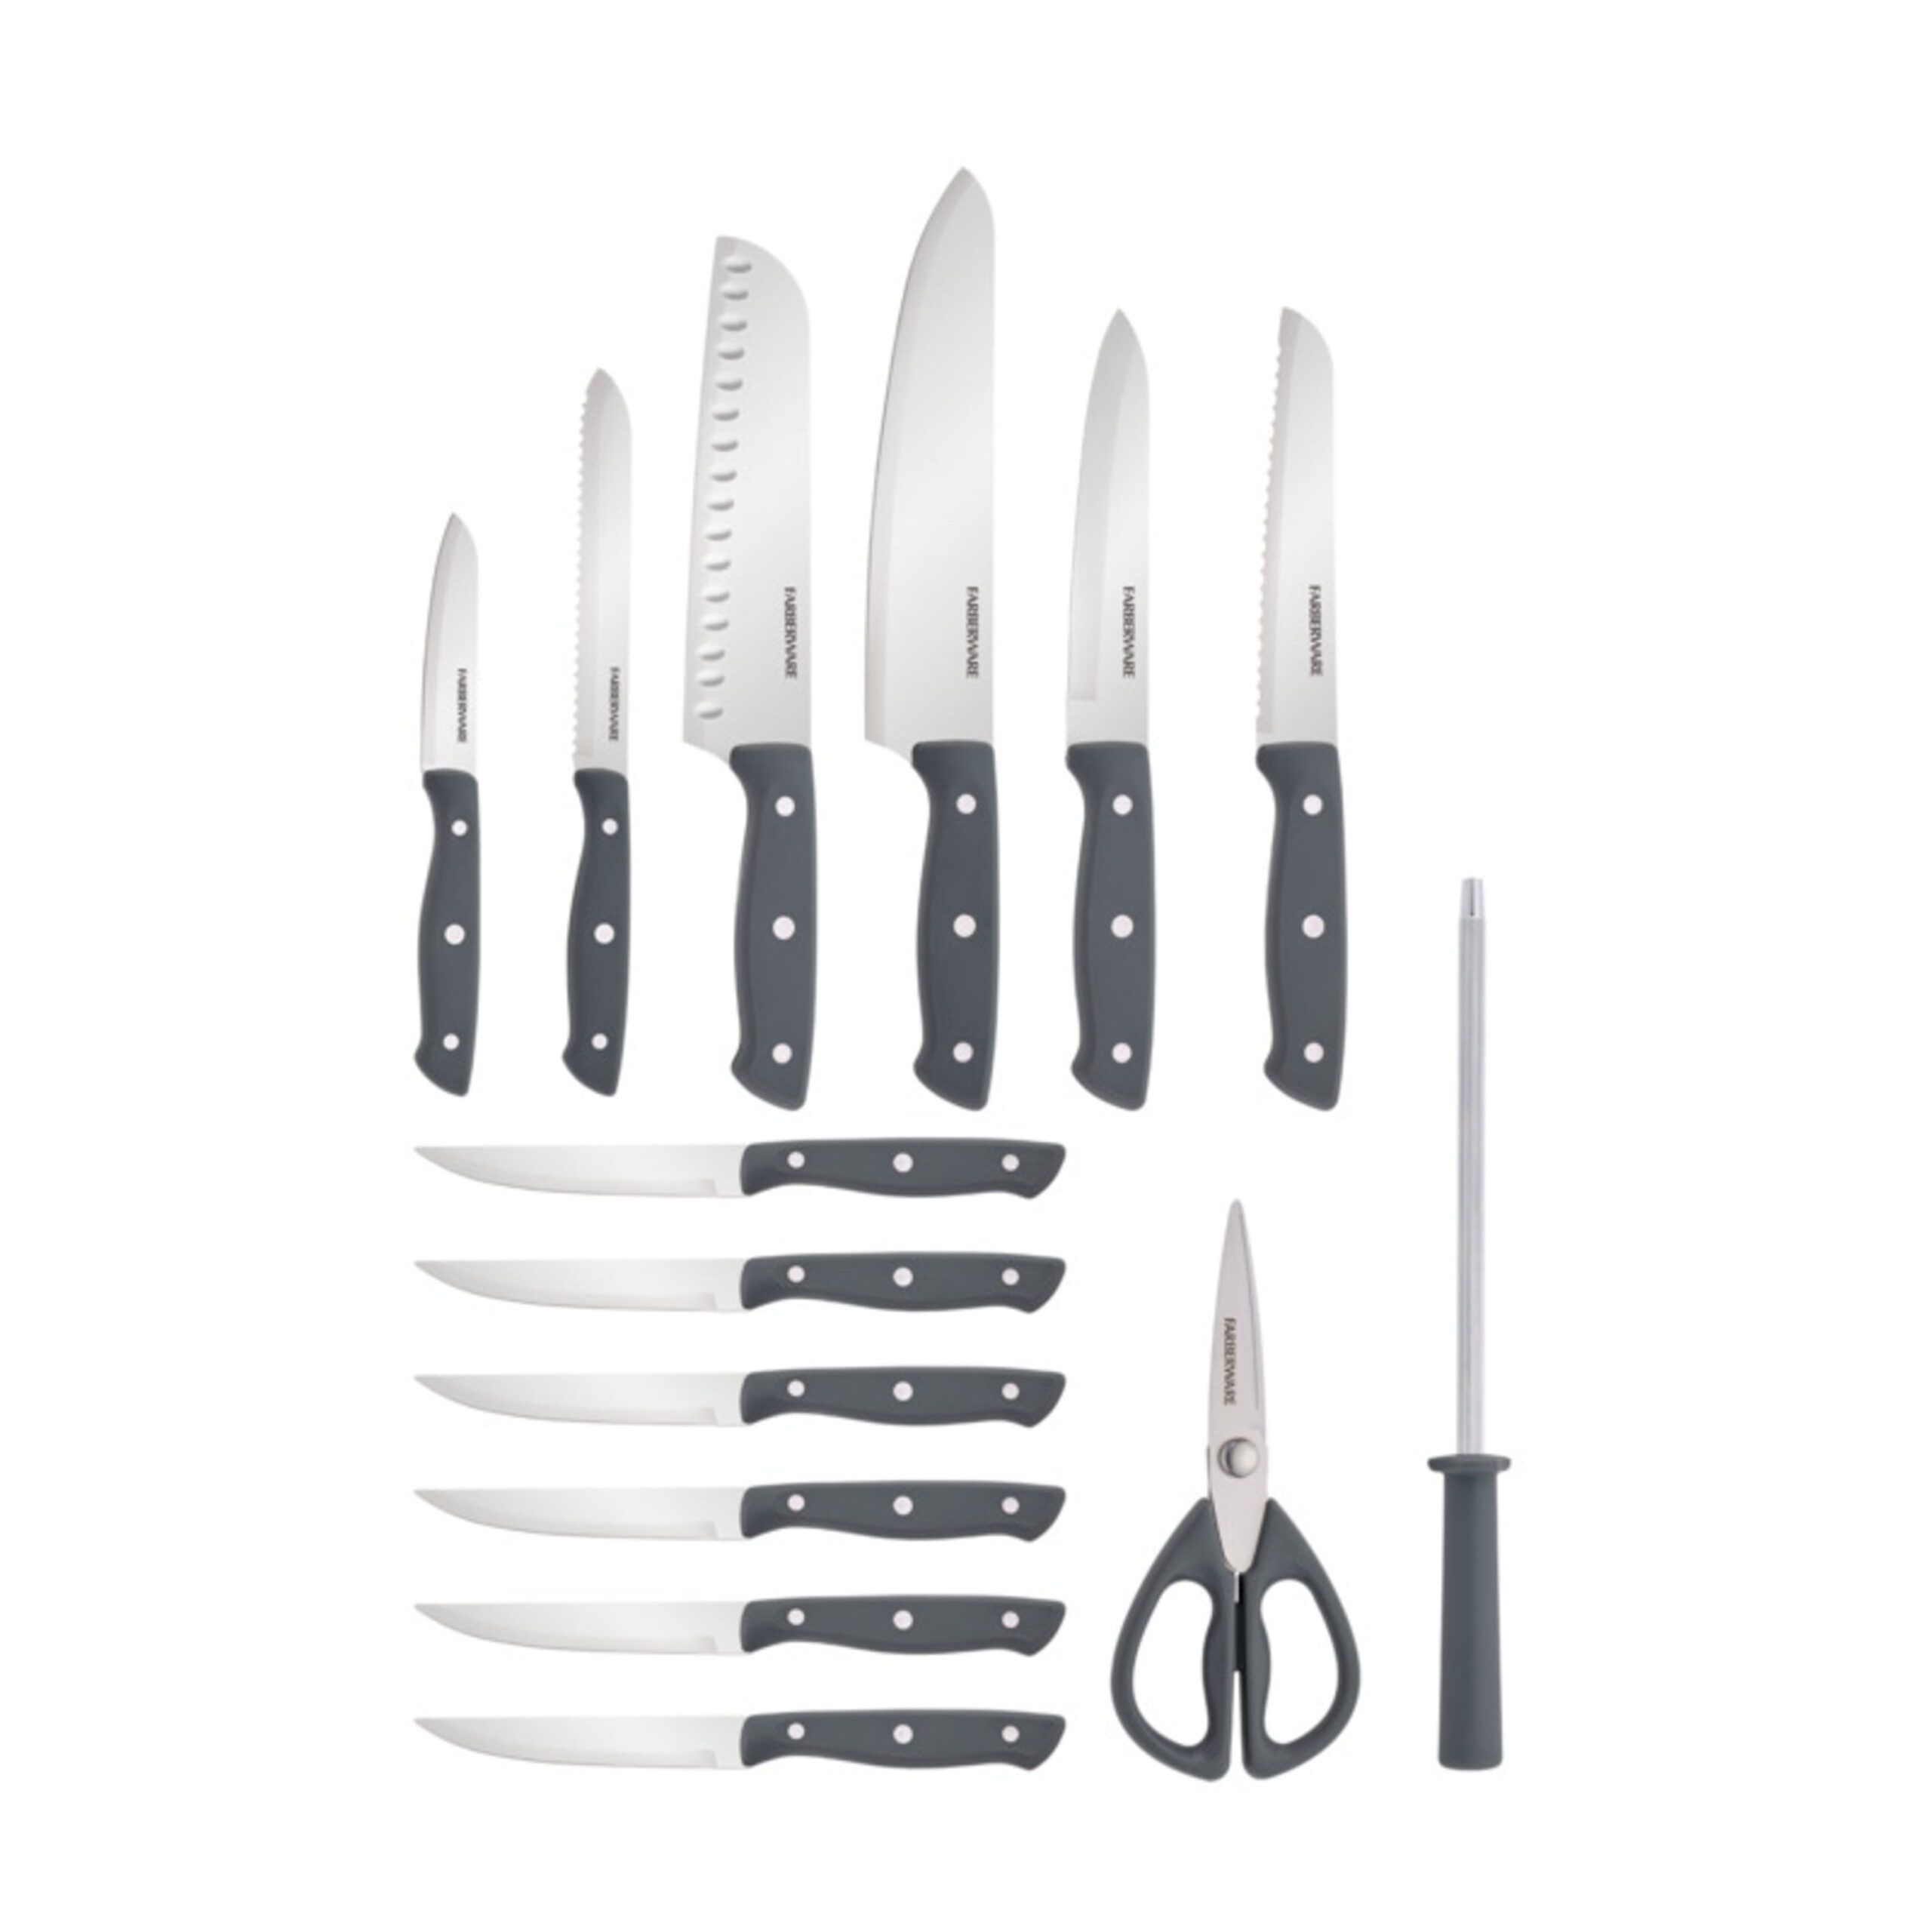 Farberware 15-pc. Stainless Steel Cutlery Set